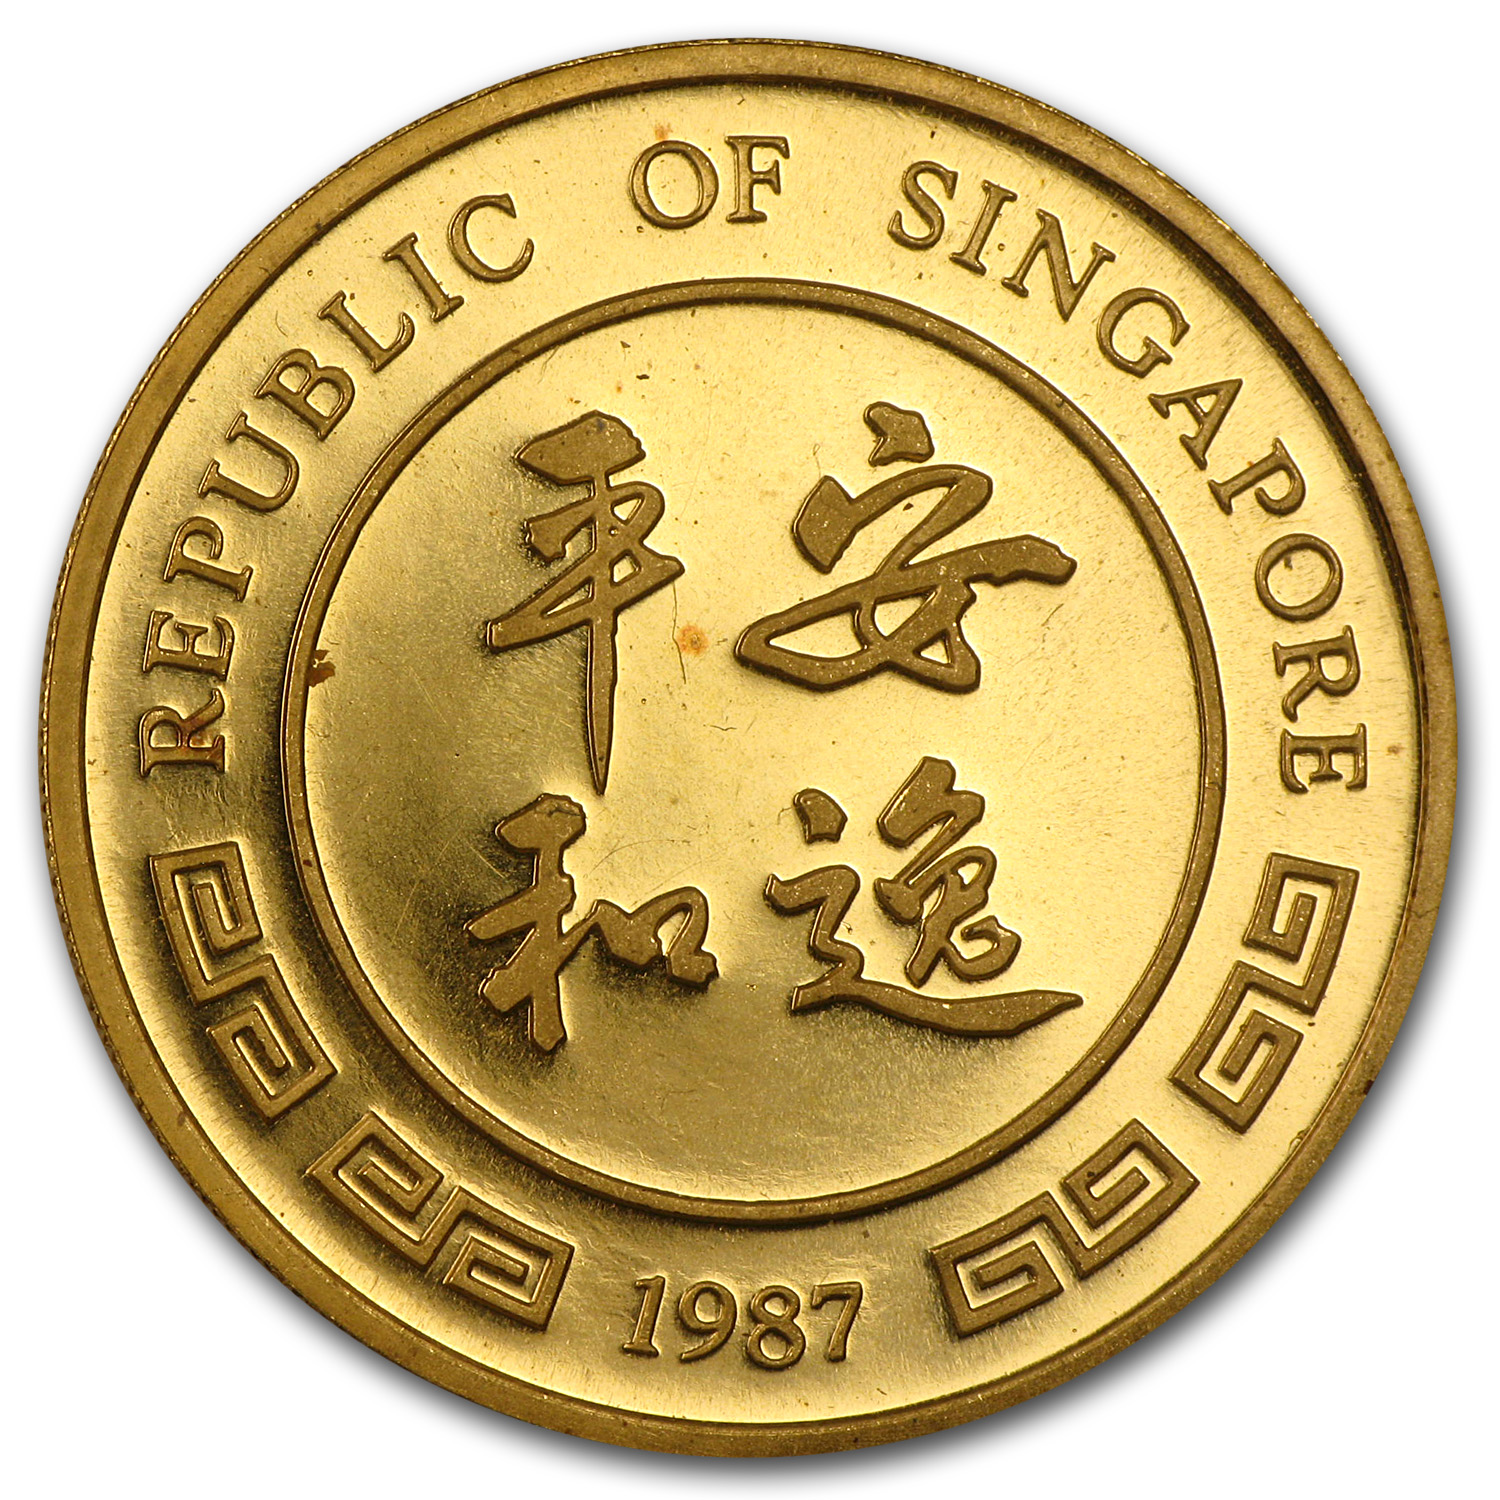 1987 Singapore 1 oz Gold 100 Singold Rabbit Proof-Like